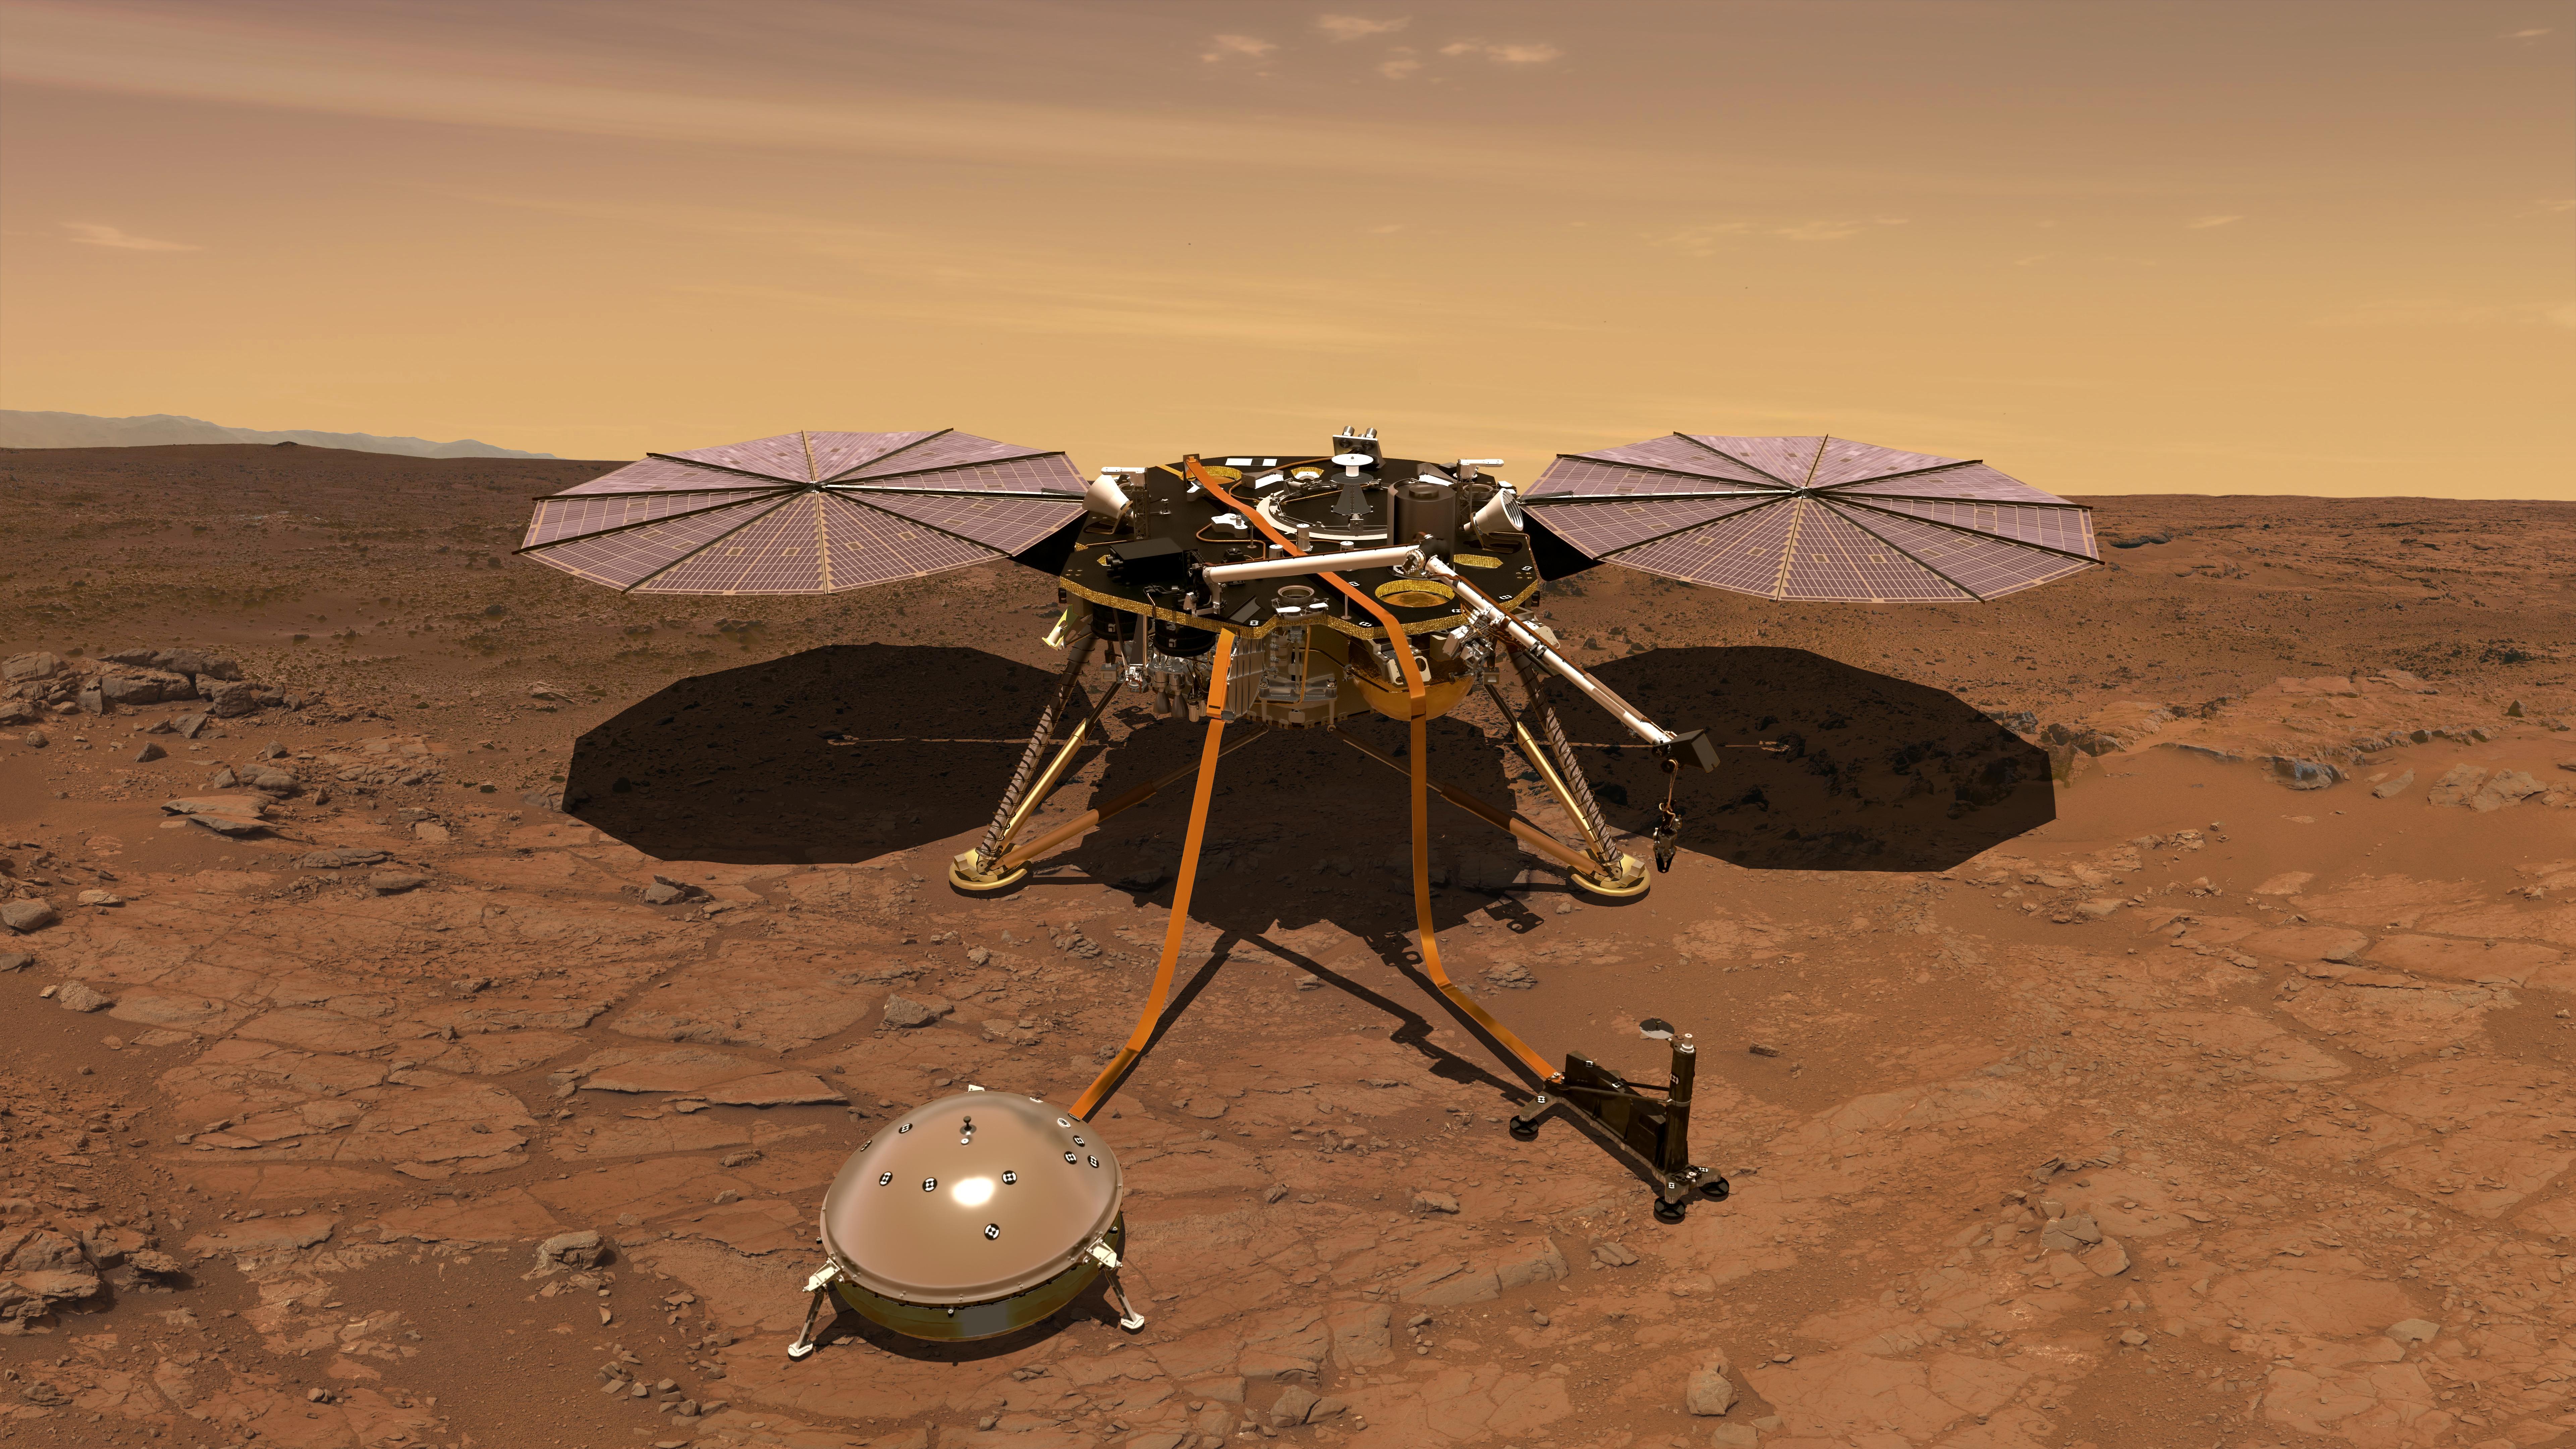 Программа зонд. Зонд NASA Insight. Марсоход космический аппарат Insight. Посадочный модуль НАСА Insight Mars. Insight аппарат на Марсе.